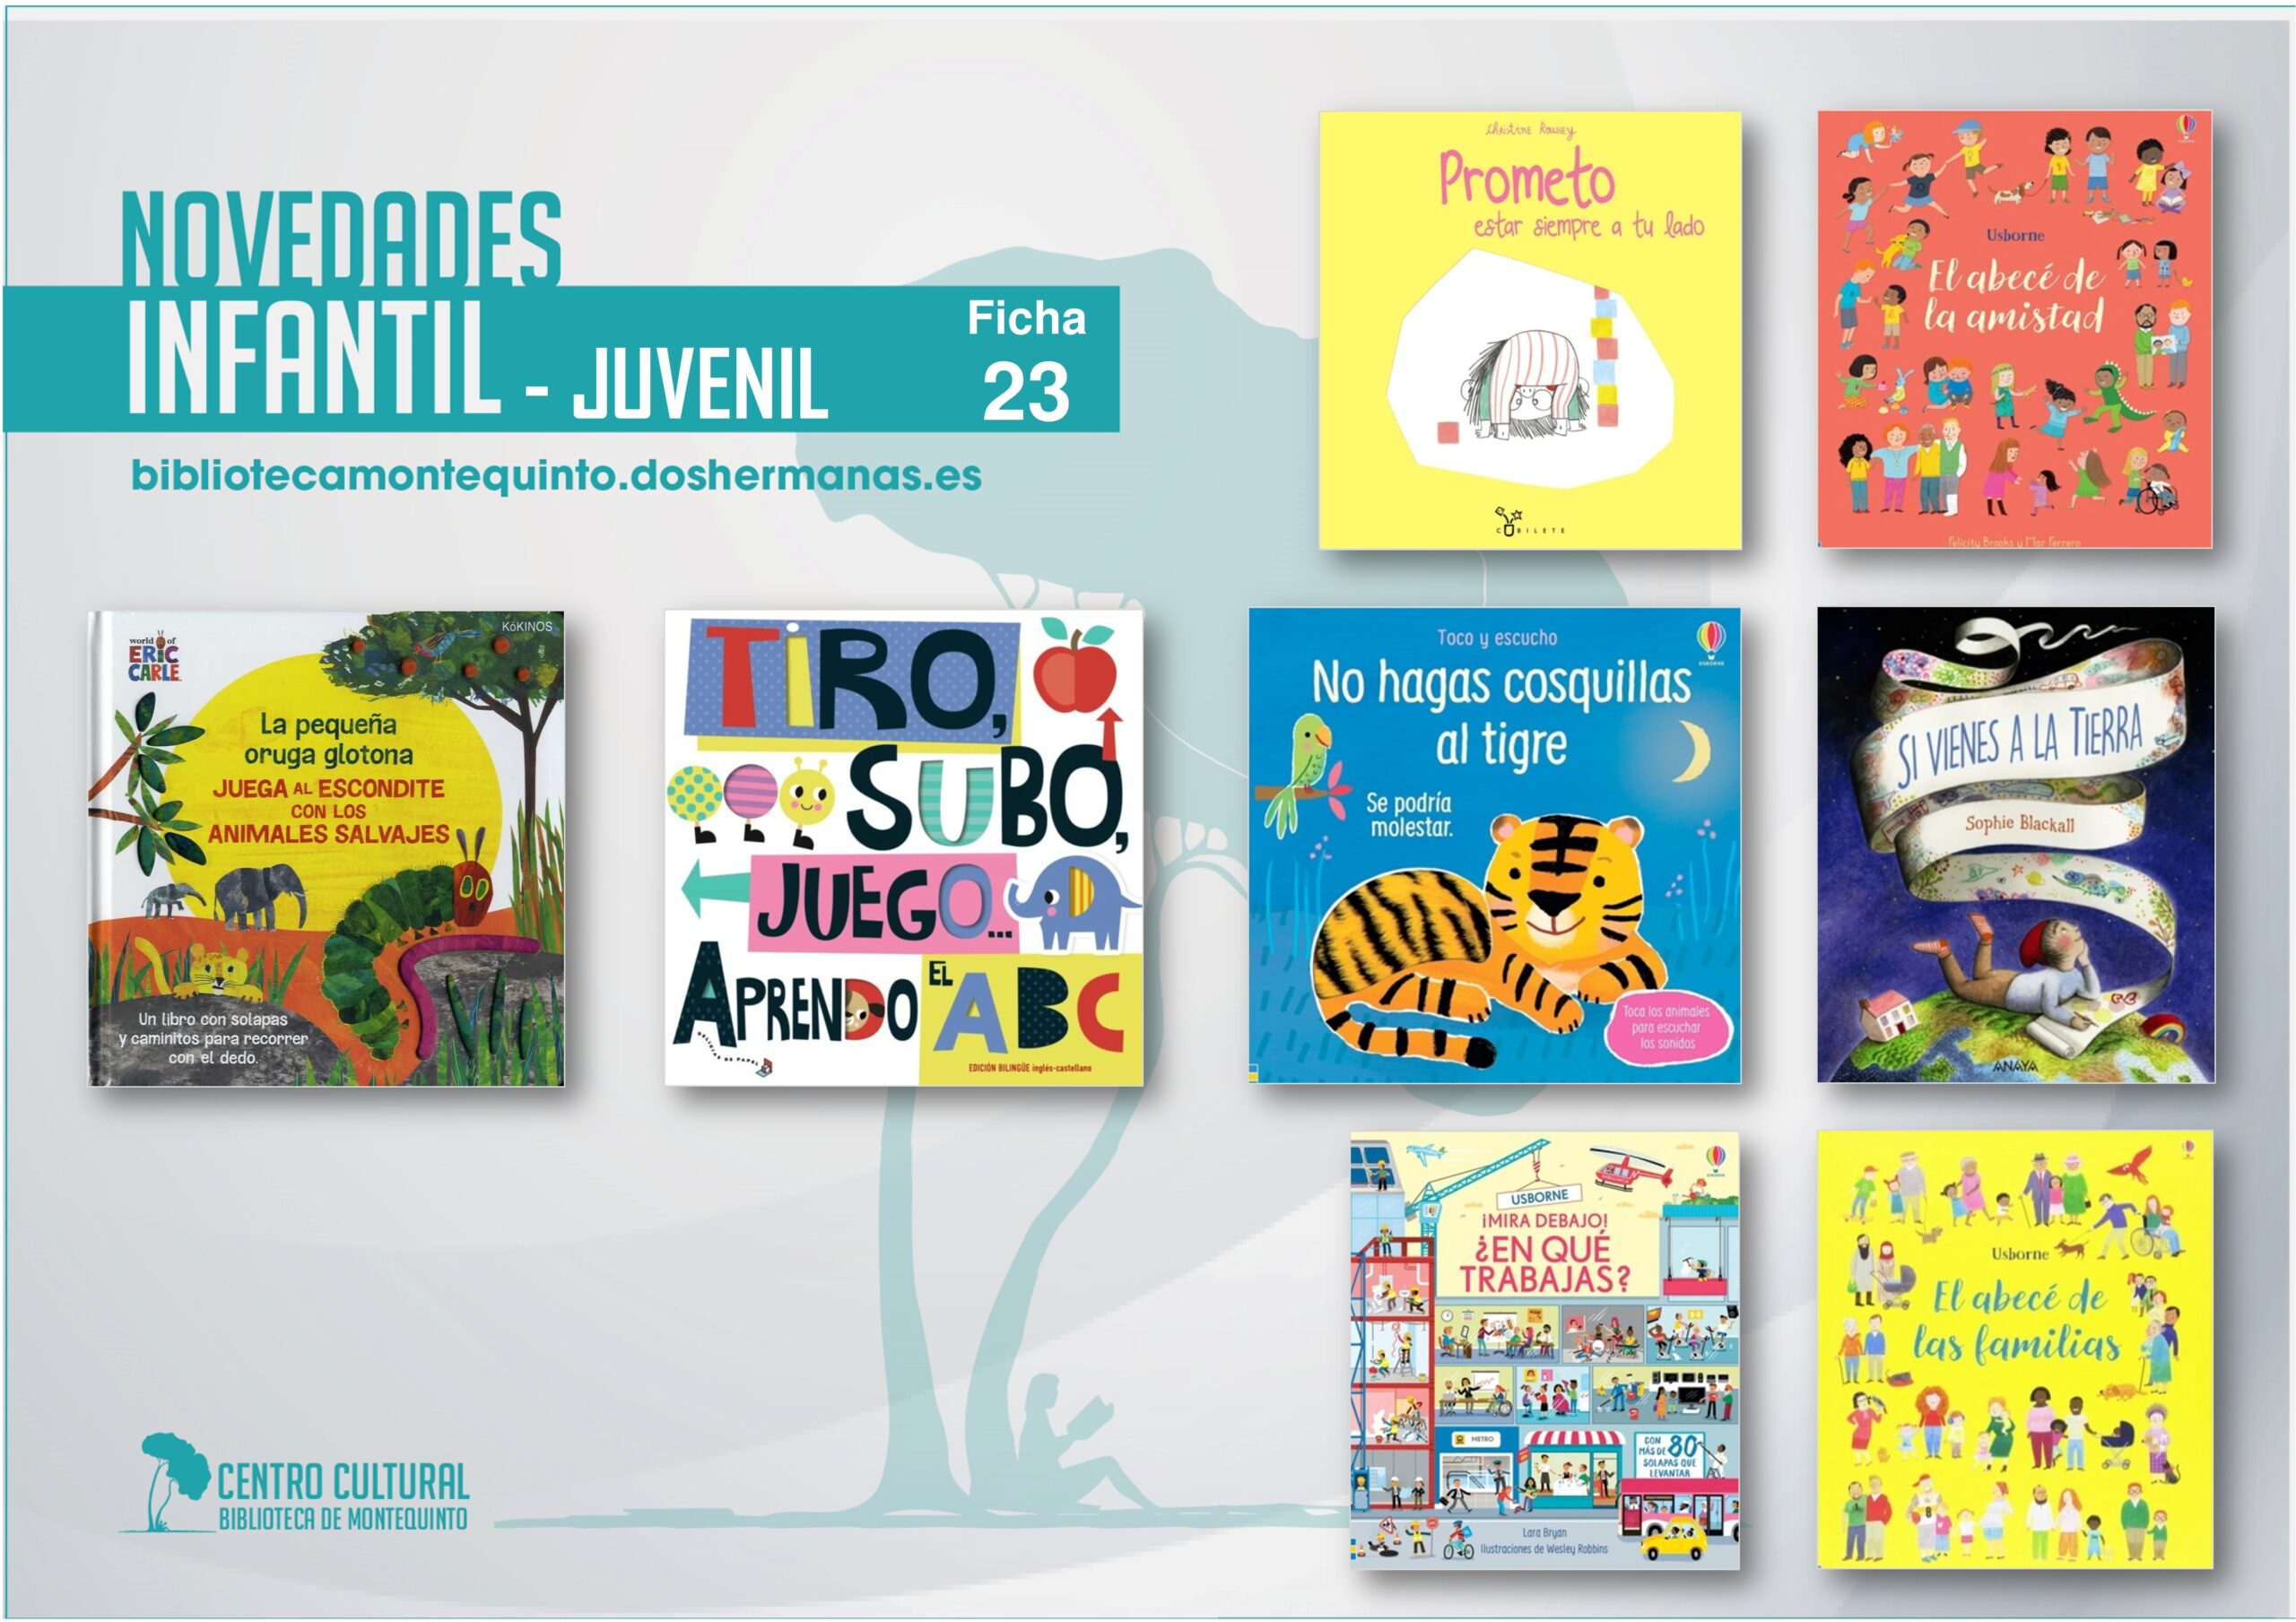 Biblioteca de Montequinto: novedades literarias 2021 - (Infantil-juvenil / Ficha 23)